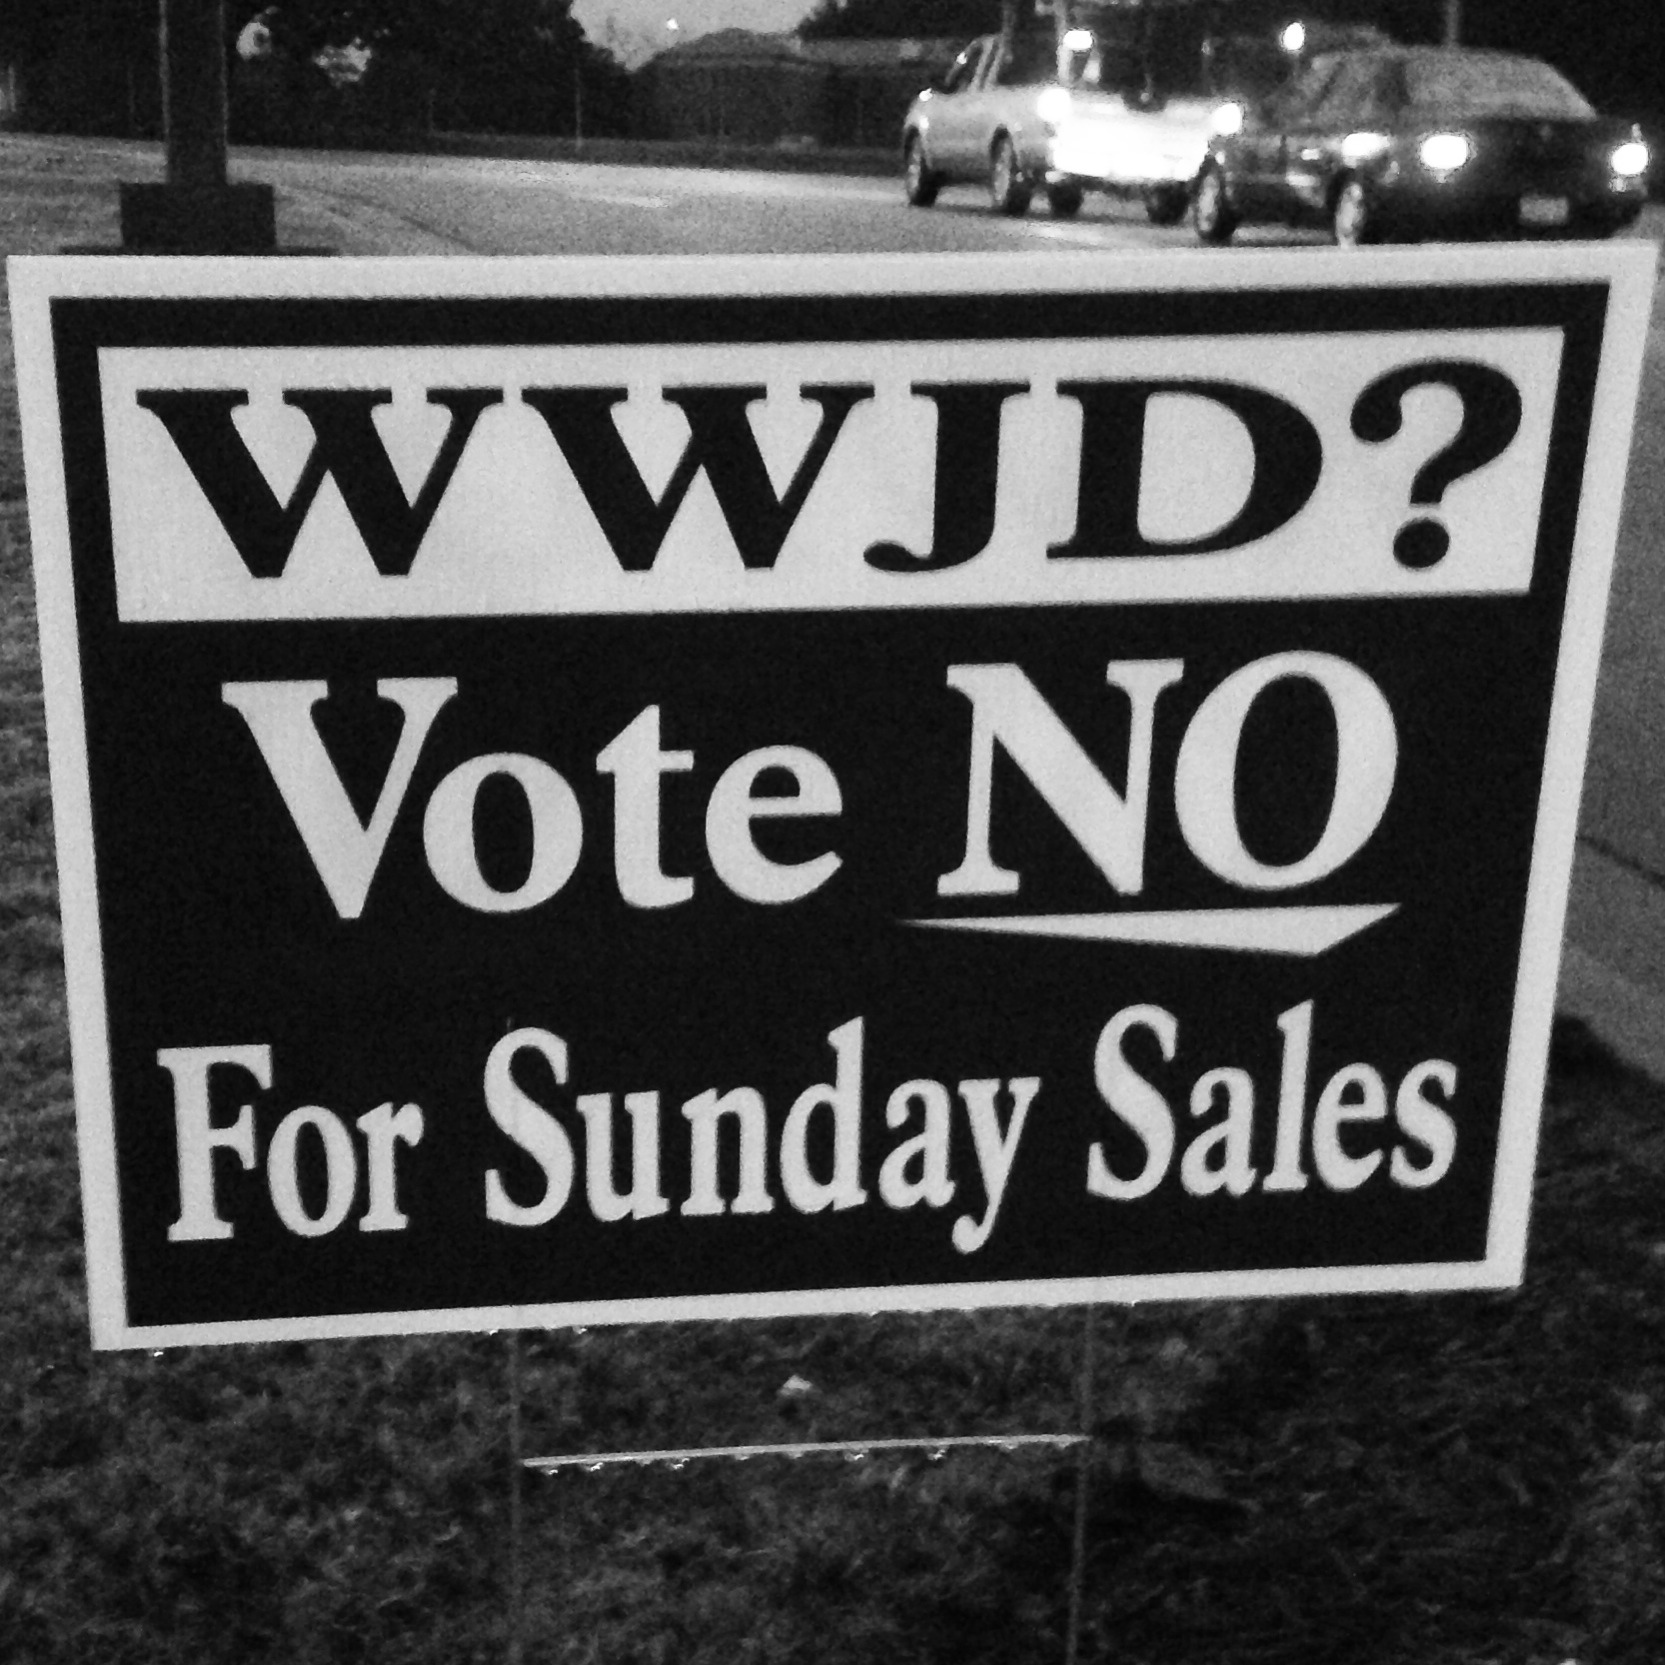 WWJD? Vote NO For Sunday Sales